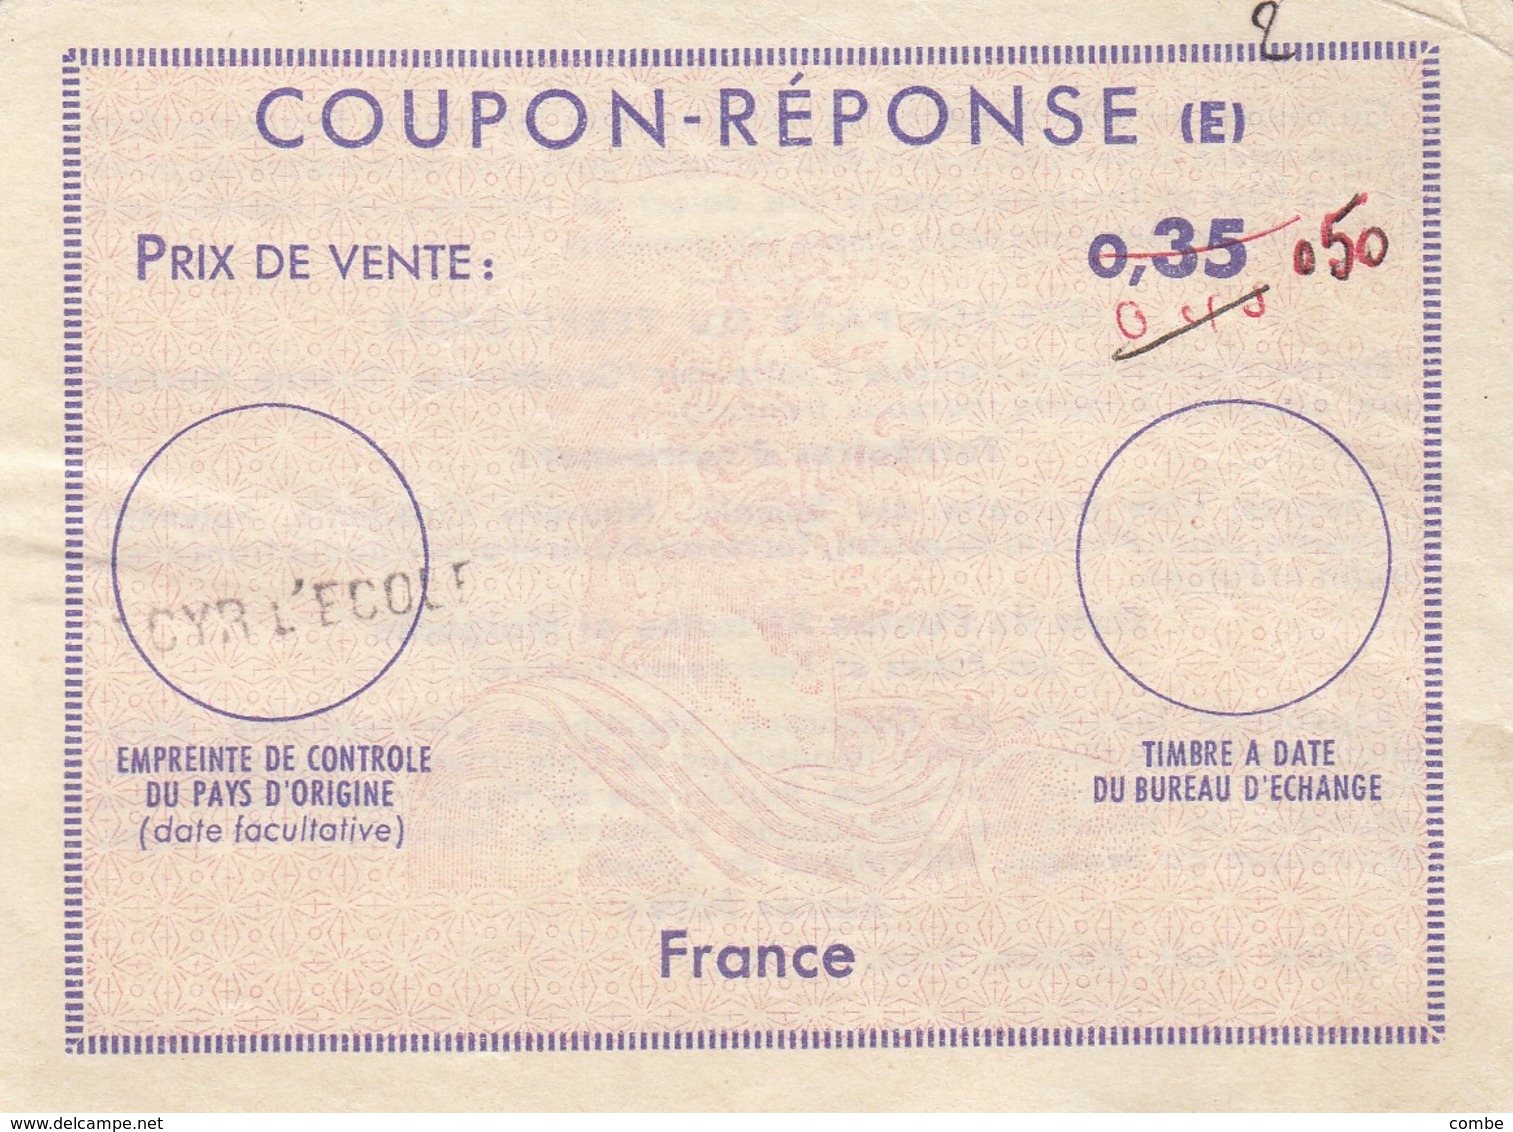 COUPON-REPONSE INTERNATIONAL. E. FRANCE. 0,35 FRANC RECTIFIE 0,40 FRANC 0,50 FRANC. ST CYR-L'ECOLE      / 2 - Reply Coupons